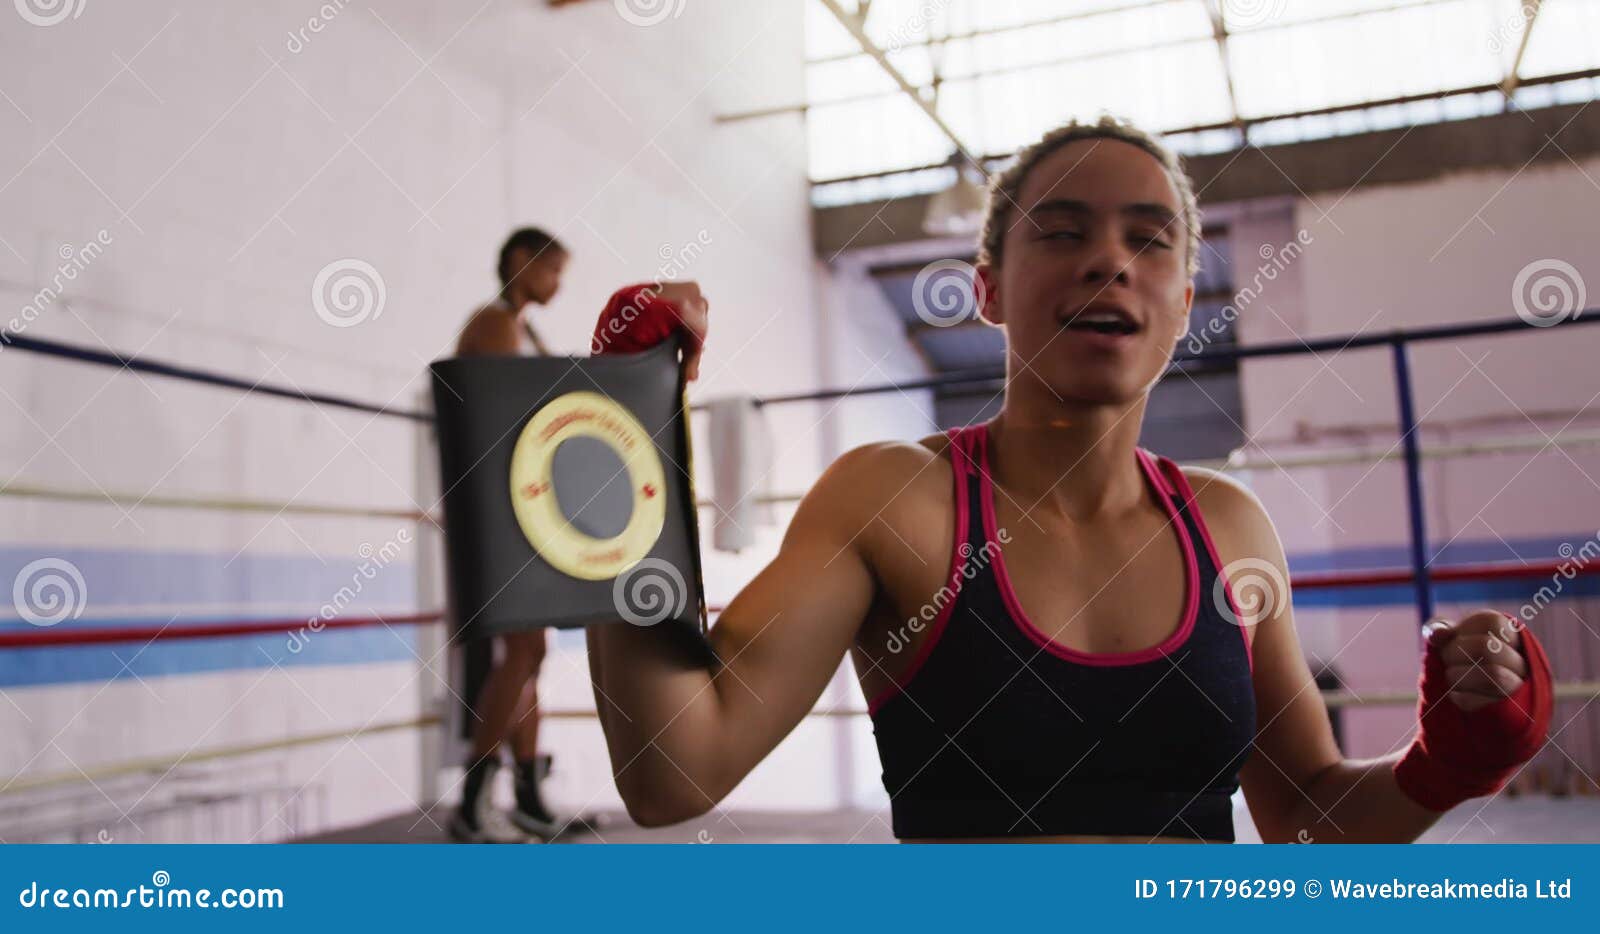 ashfaq umar share mixed boxing woman wins photos